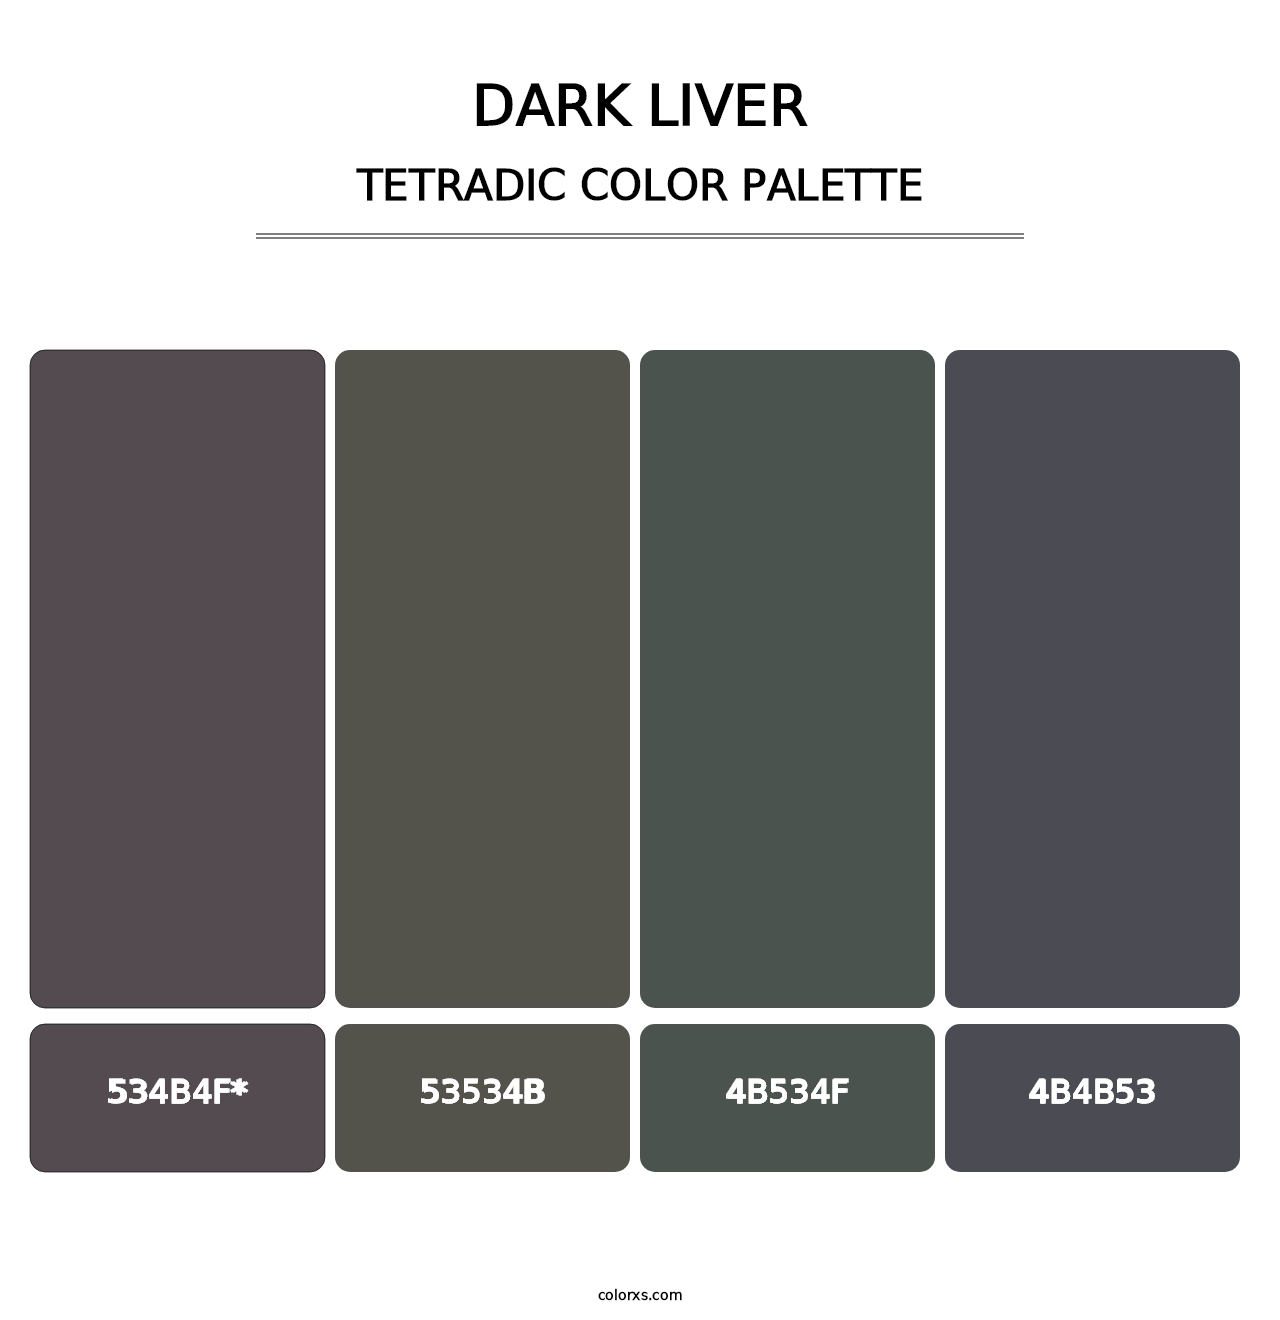 Dark Liver - Tetradic Color Palette